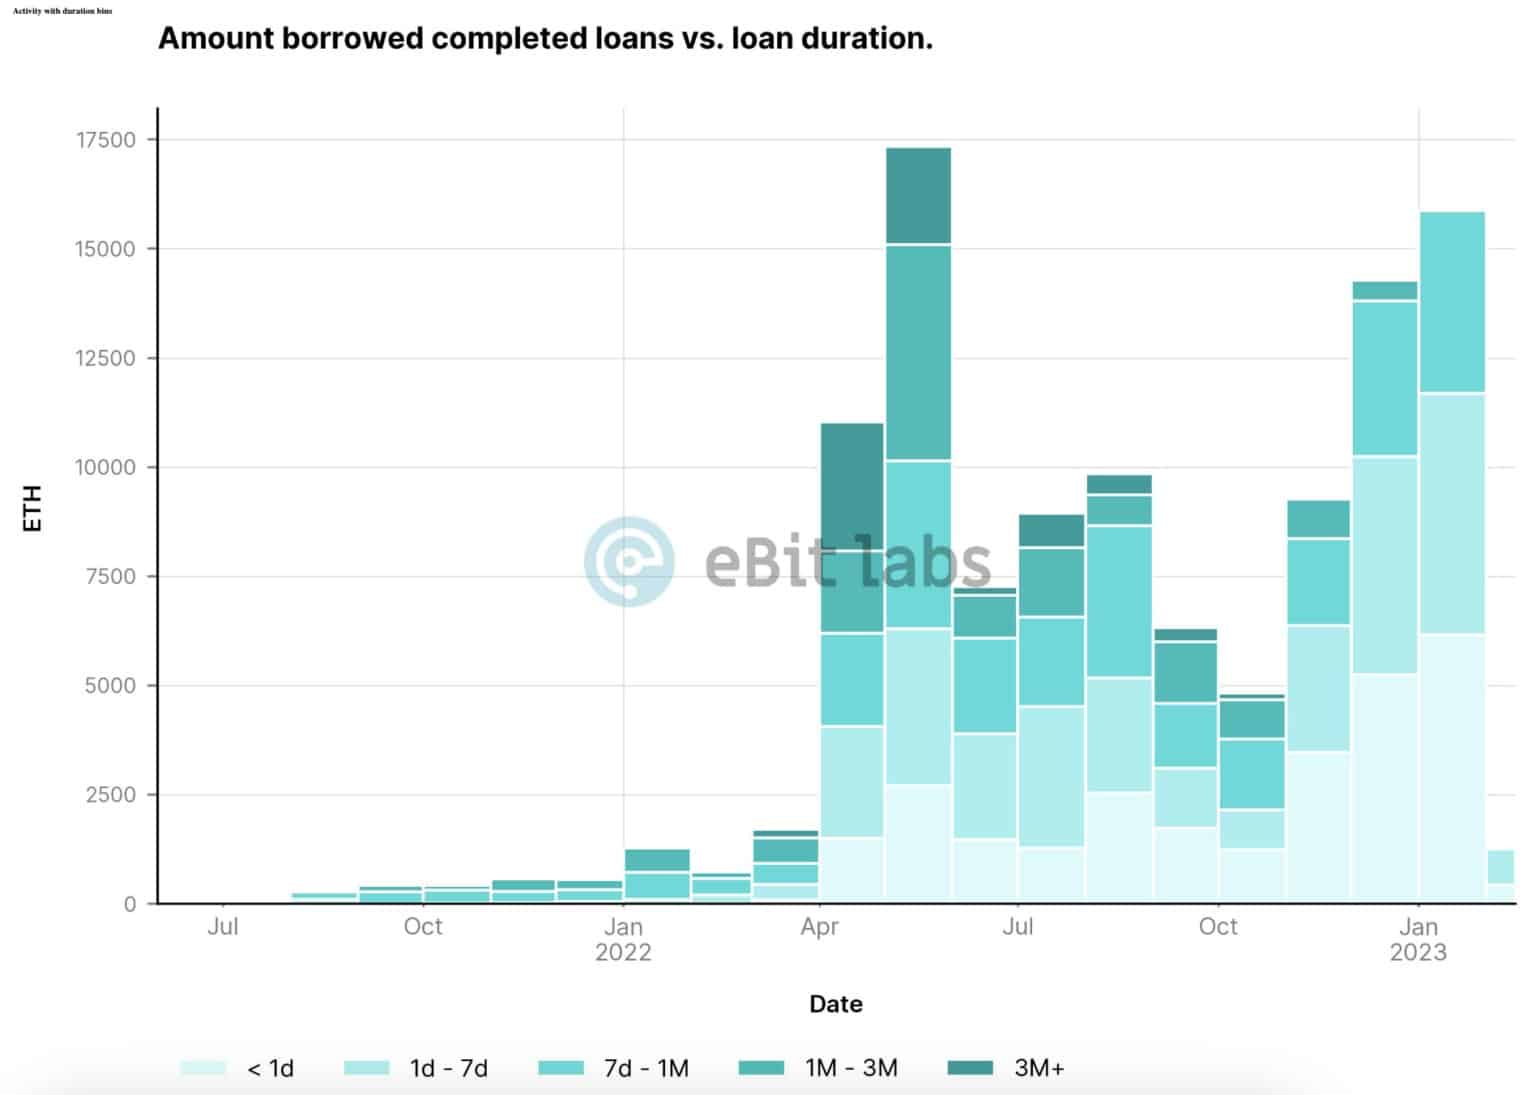 BAYC Borrowing in ETH (Source: eBitLabs)